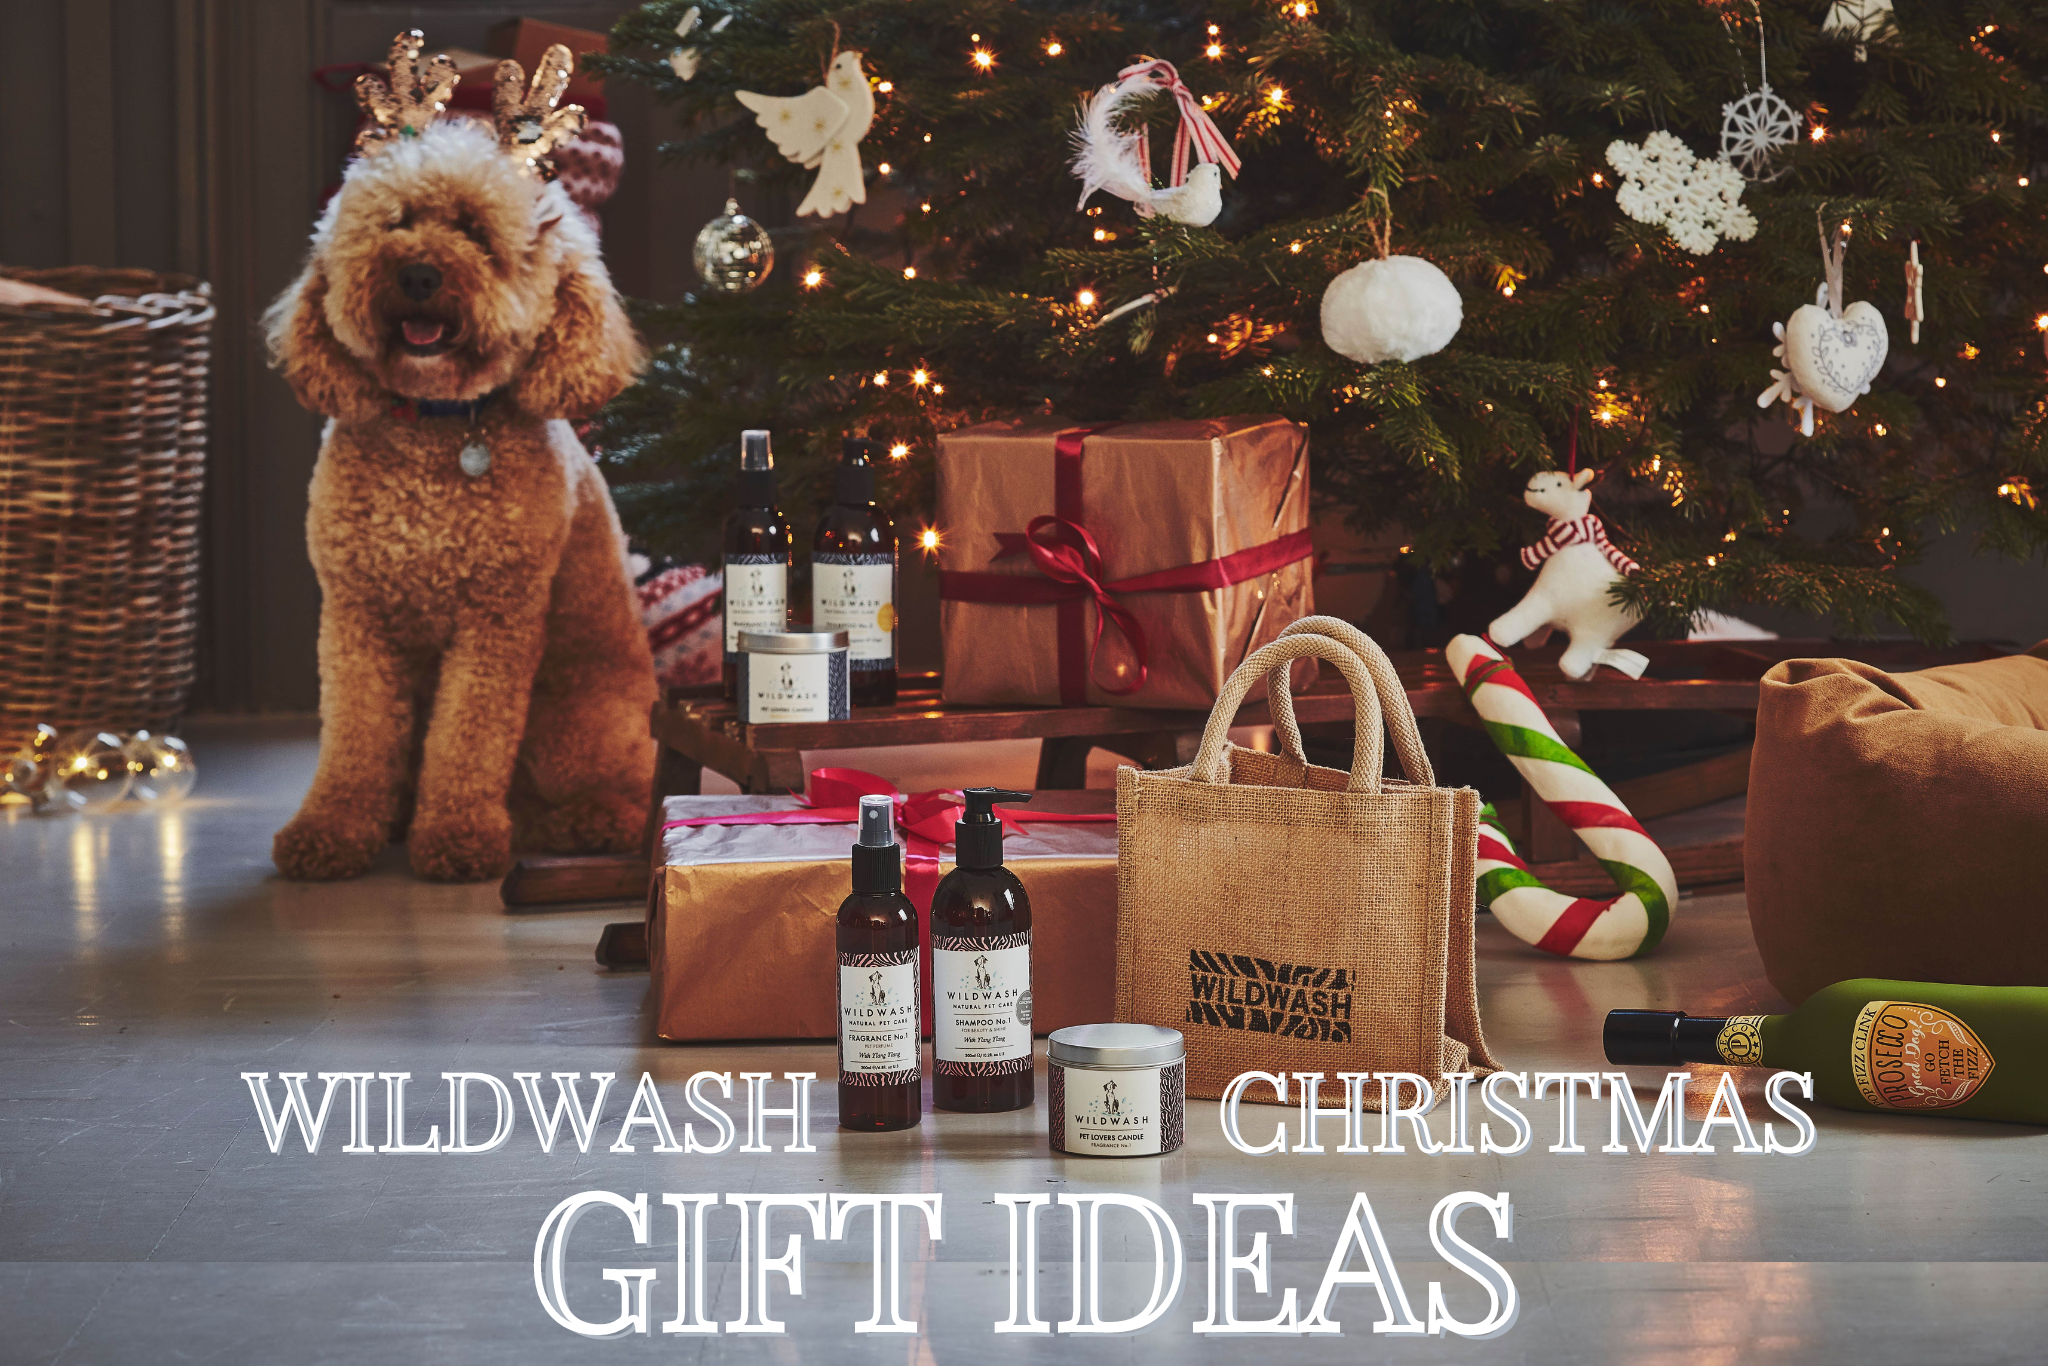 WildWash Christmas Gift Guide Ideas (2)